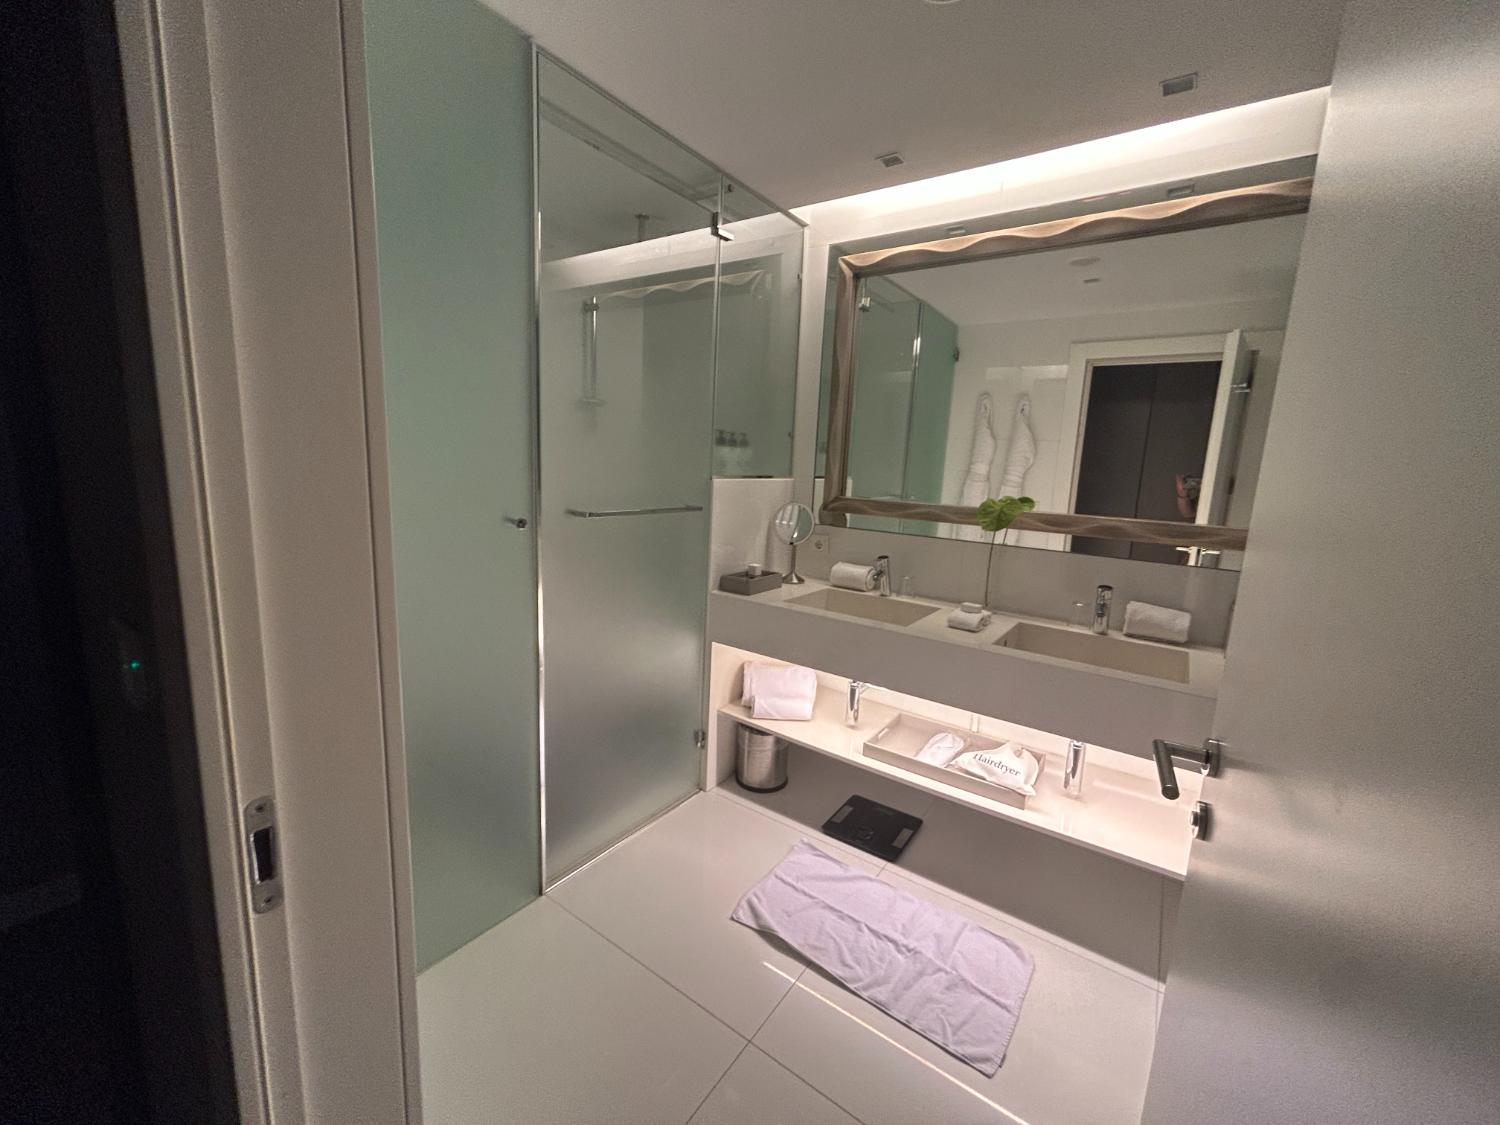 hotel review - Bathroom